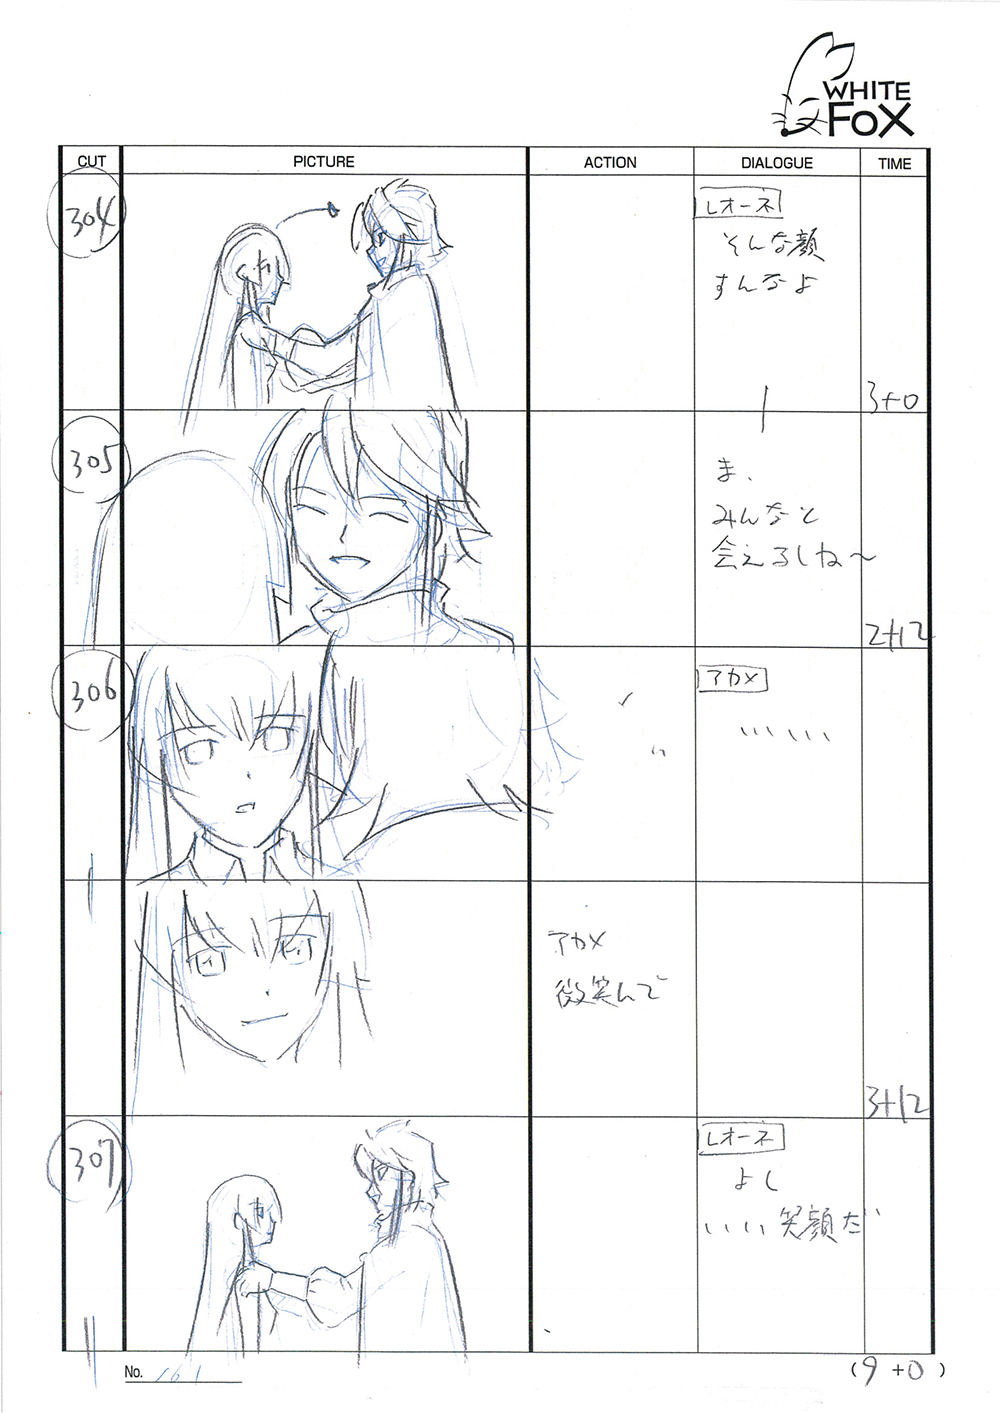 Akame ga Kill Episode 24 Storyboard Leak 166